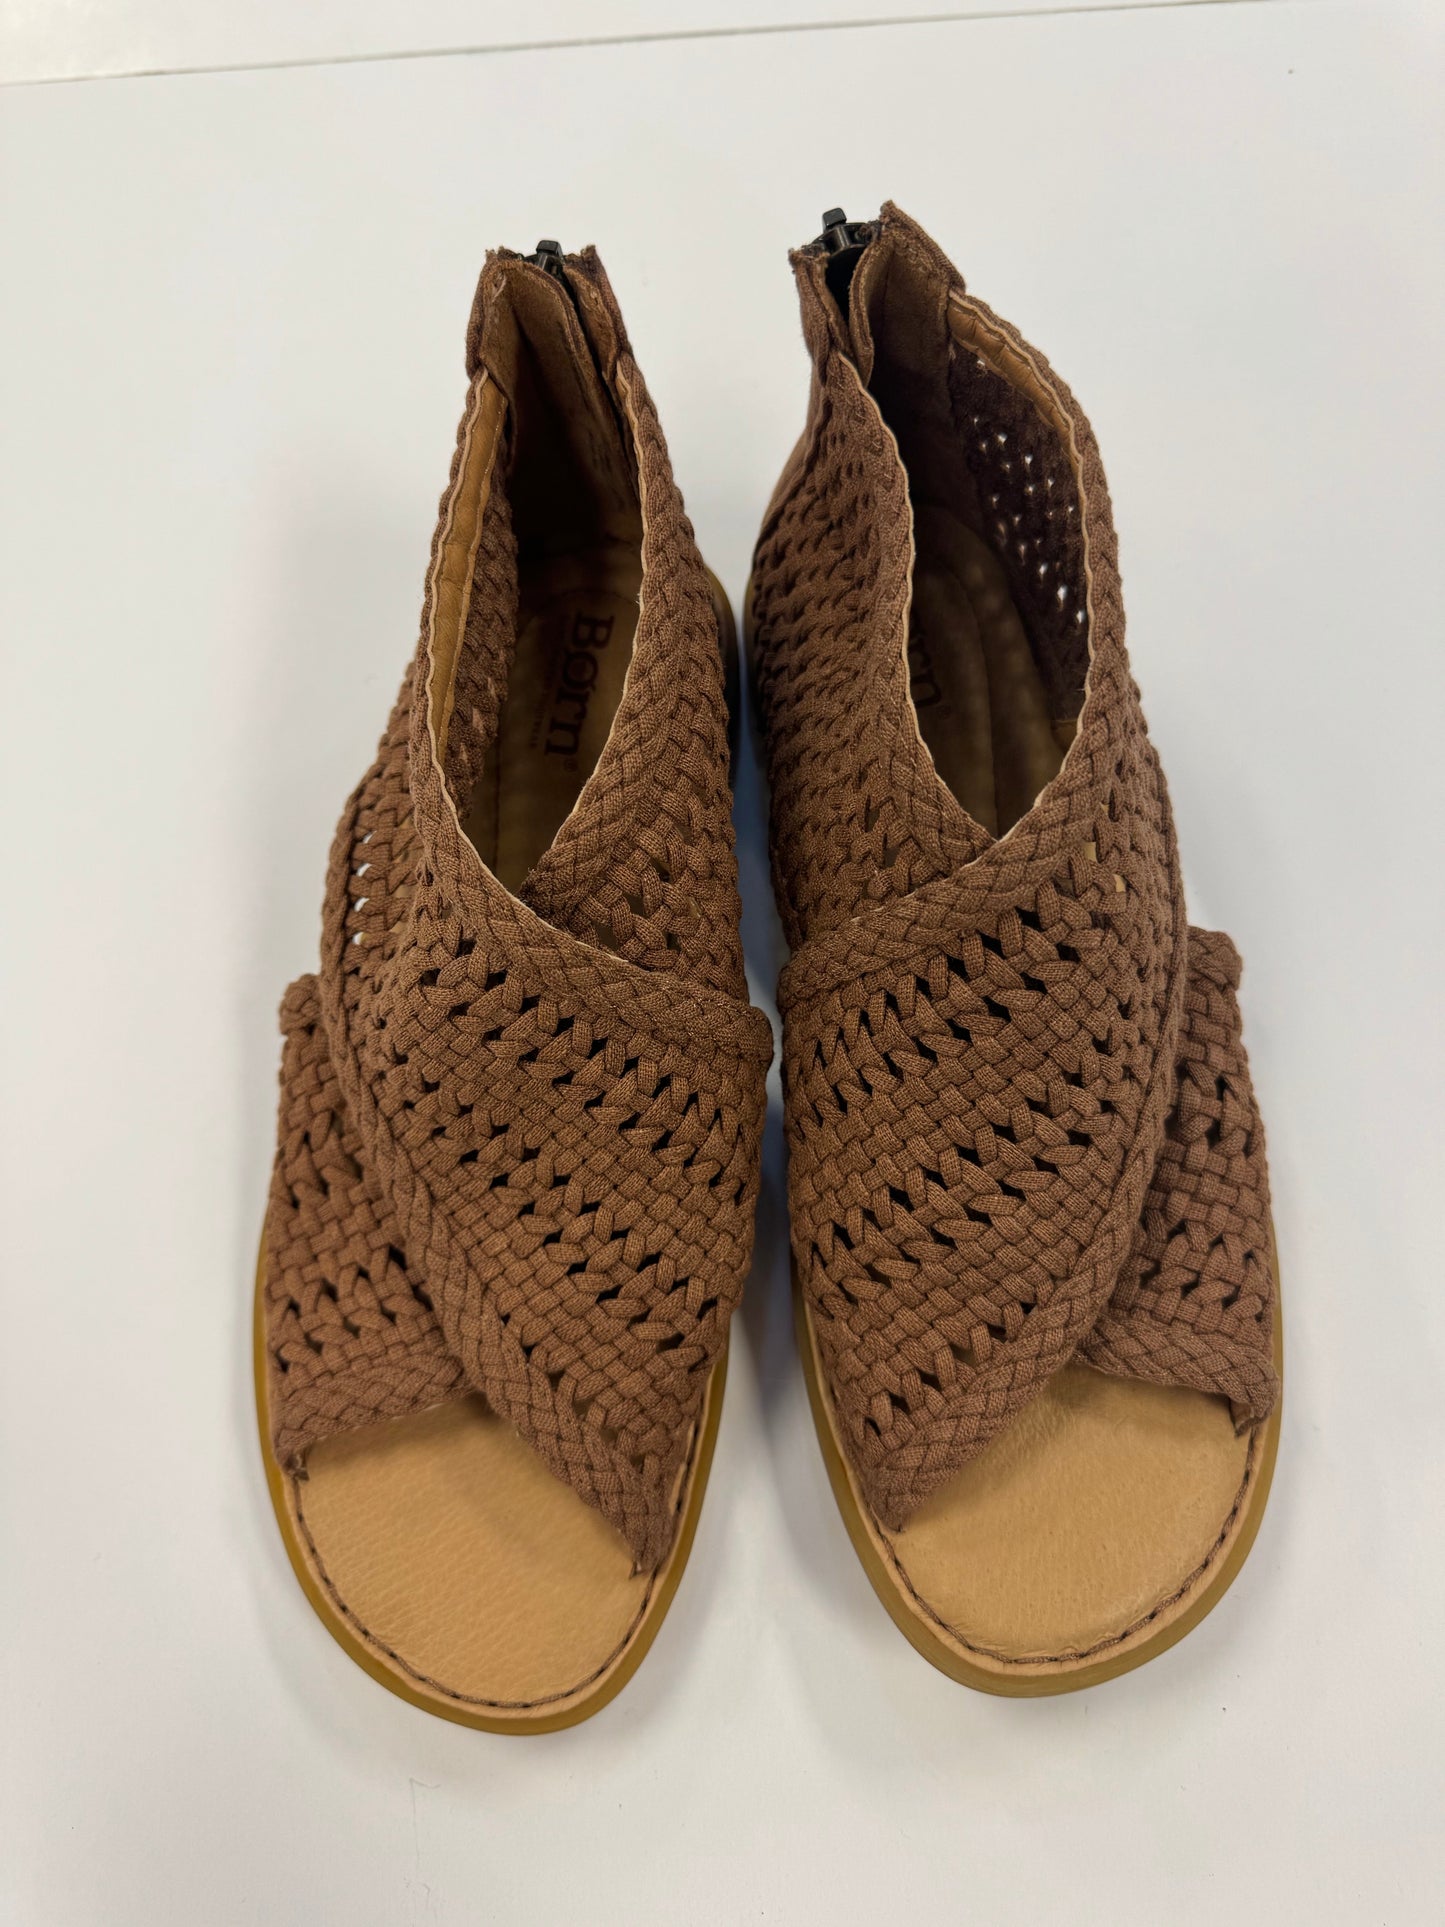 Brown Shoes Flats Born, Size 7